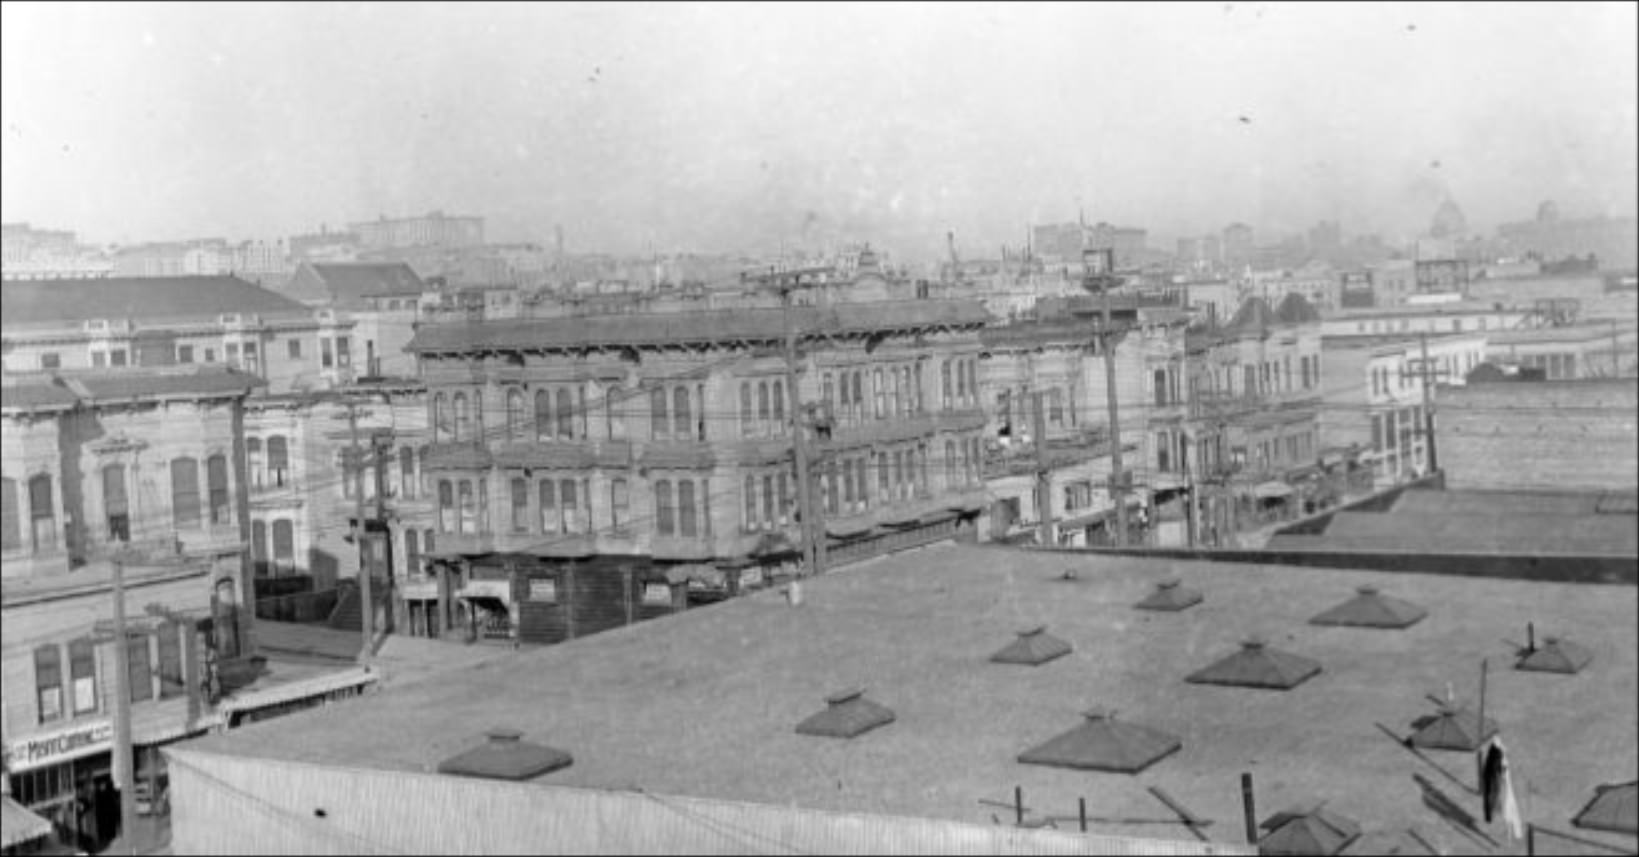 View of McAllister Street from the roof of John Swett School, 1912.